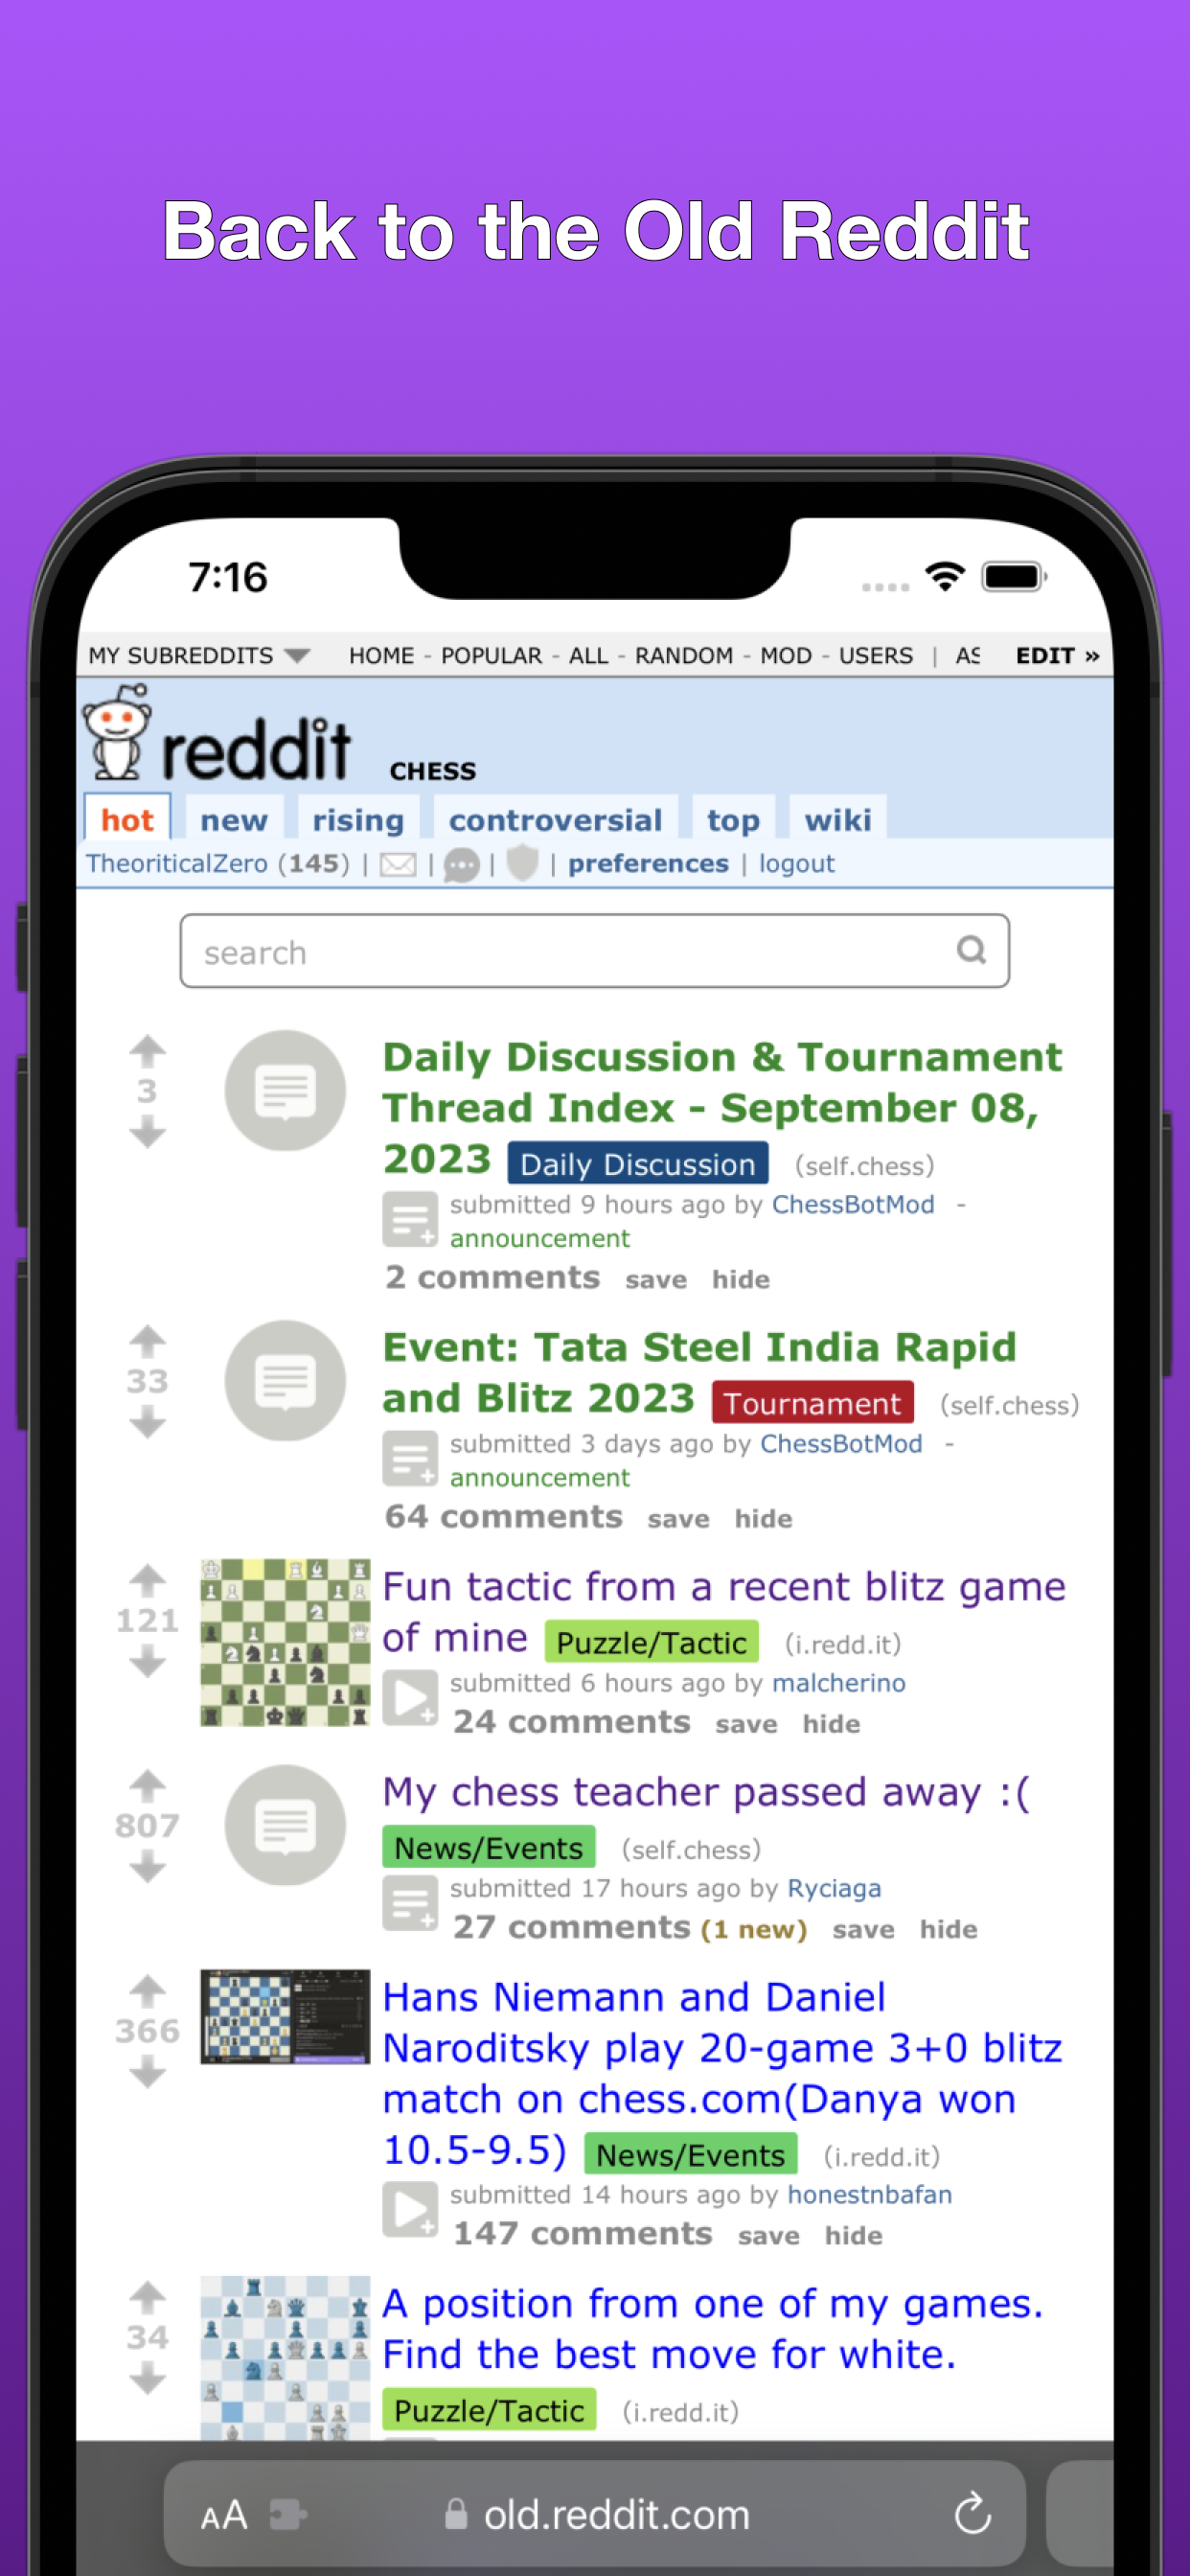 startuptile Yesterday For Old Reddit-Old Reddit optimized for iPhones